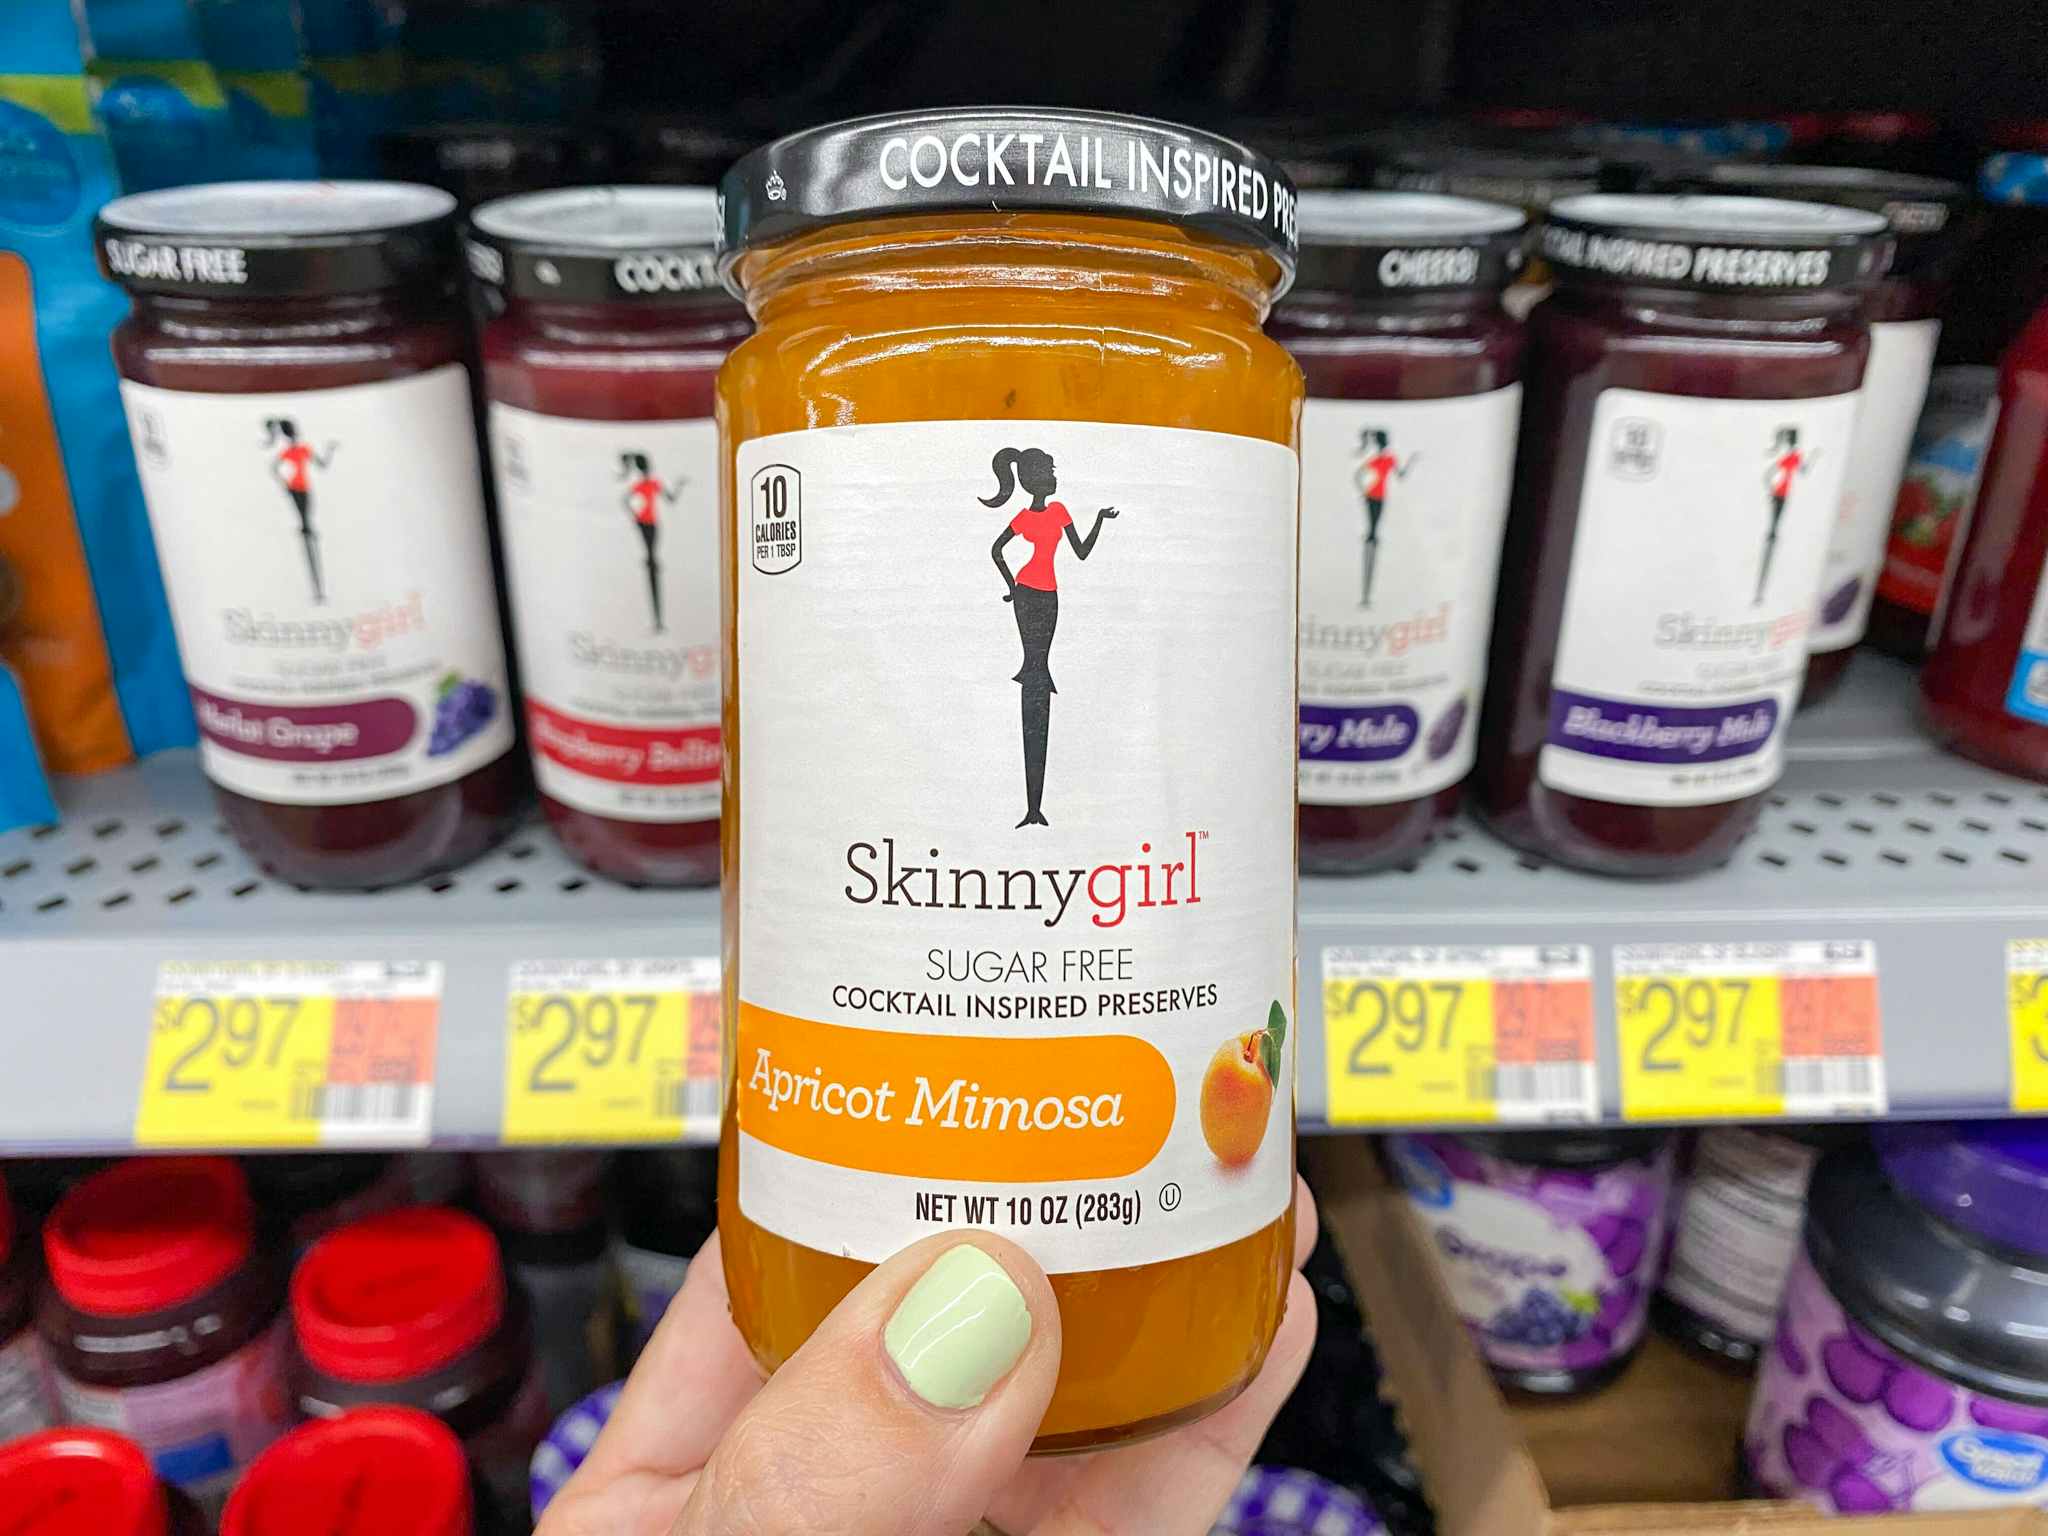 Skinnygirl Sugar-Free Preserves, Only $1.47 at Walmart With Swagbucks